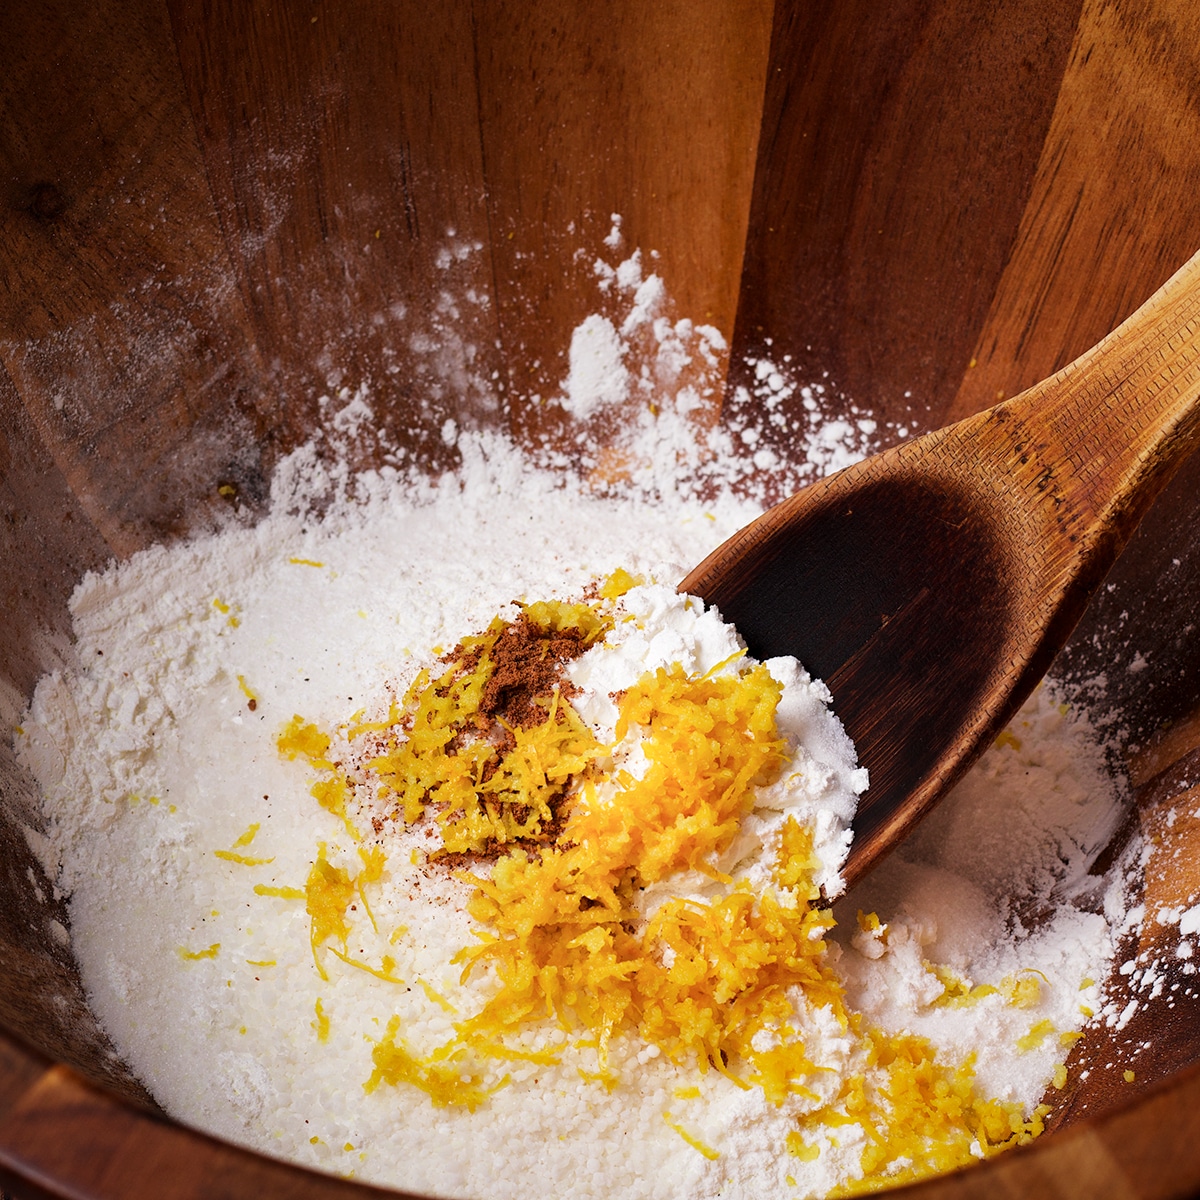 Using a wooden spoon to stir sugar, cornstarch, tapioca, nutmeg, and lemon zest.